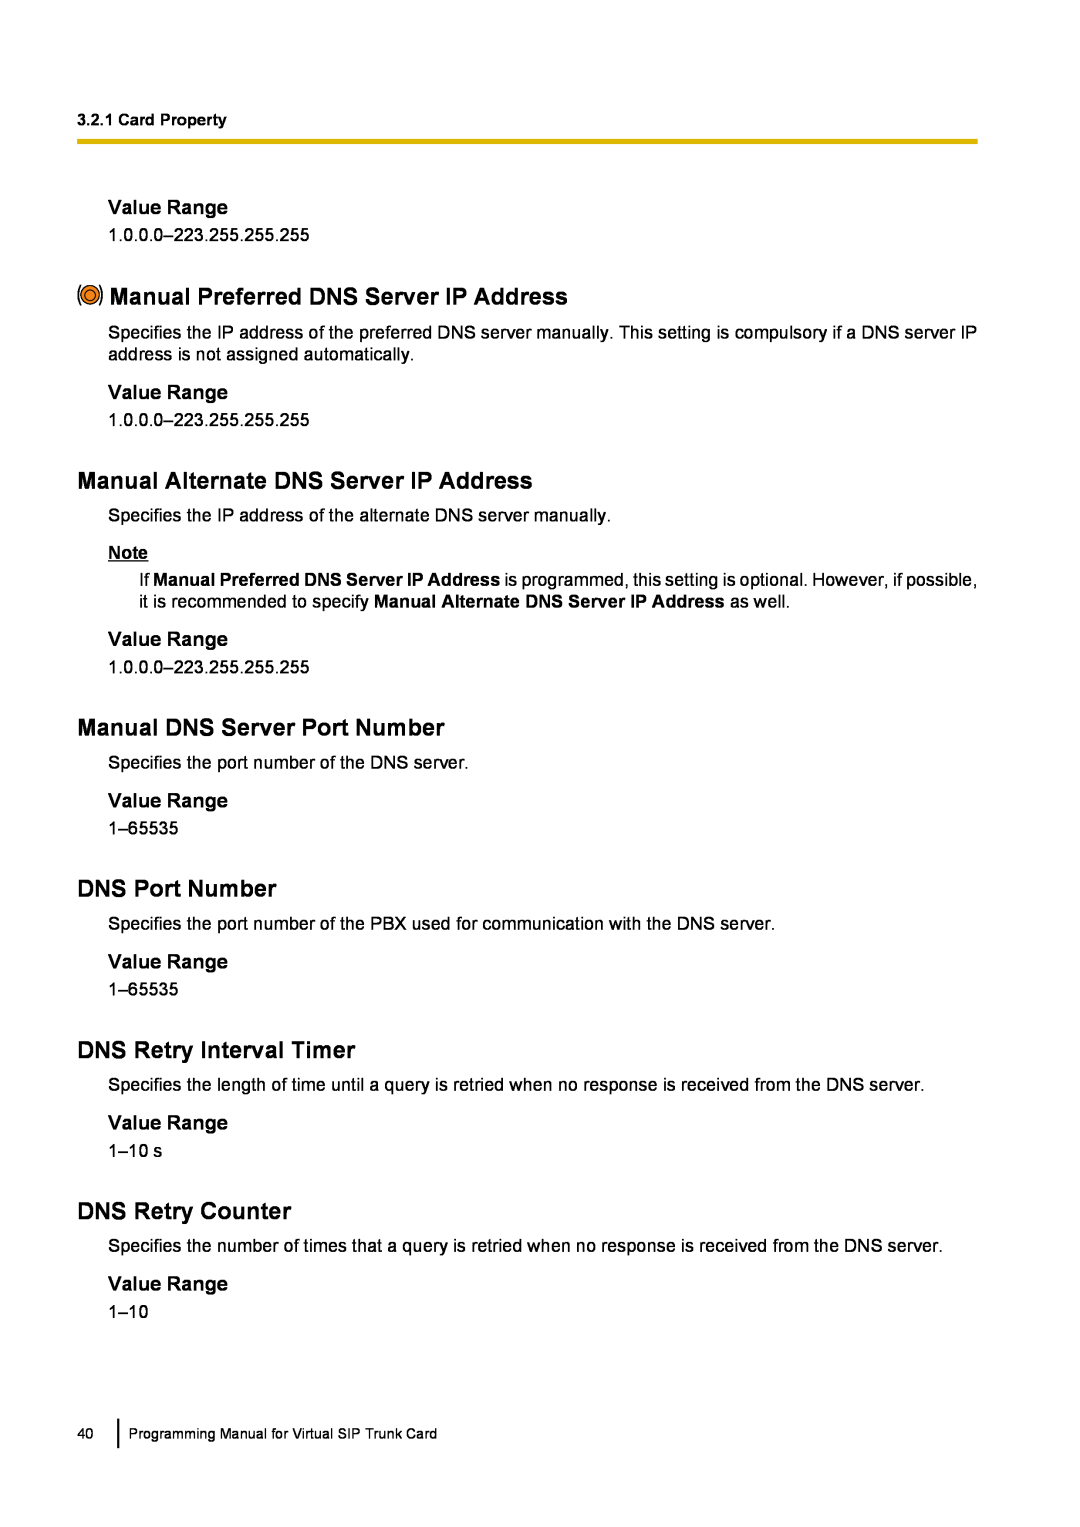 Panasonic KX-TDE100 manual Manual Preferred DNS Server IP Address, Manual Alternate DNS Server IP Address, DNS Port Number 